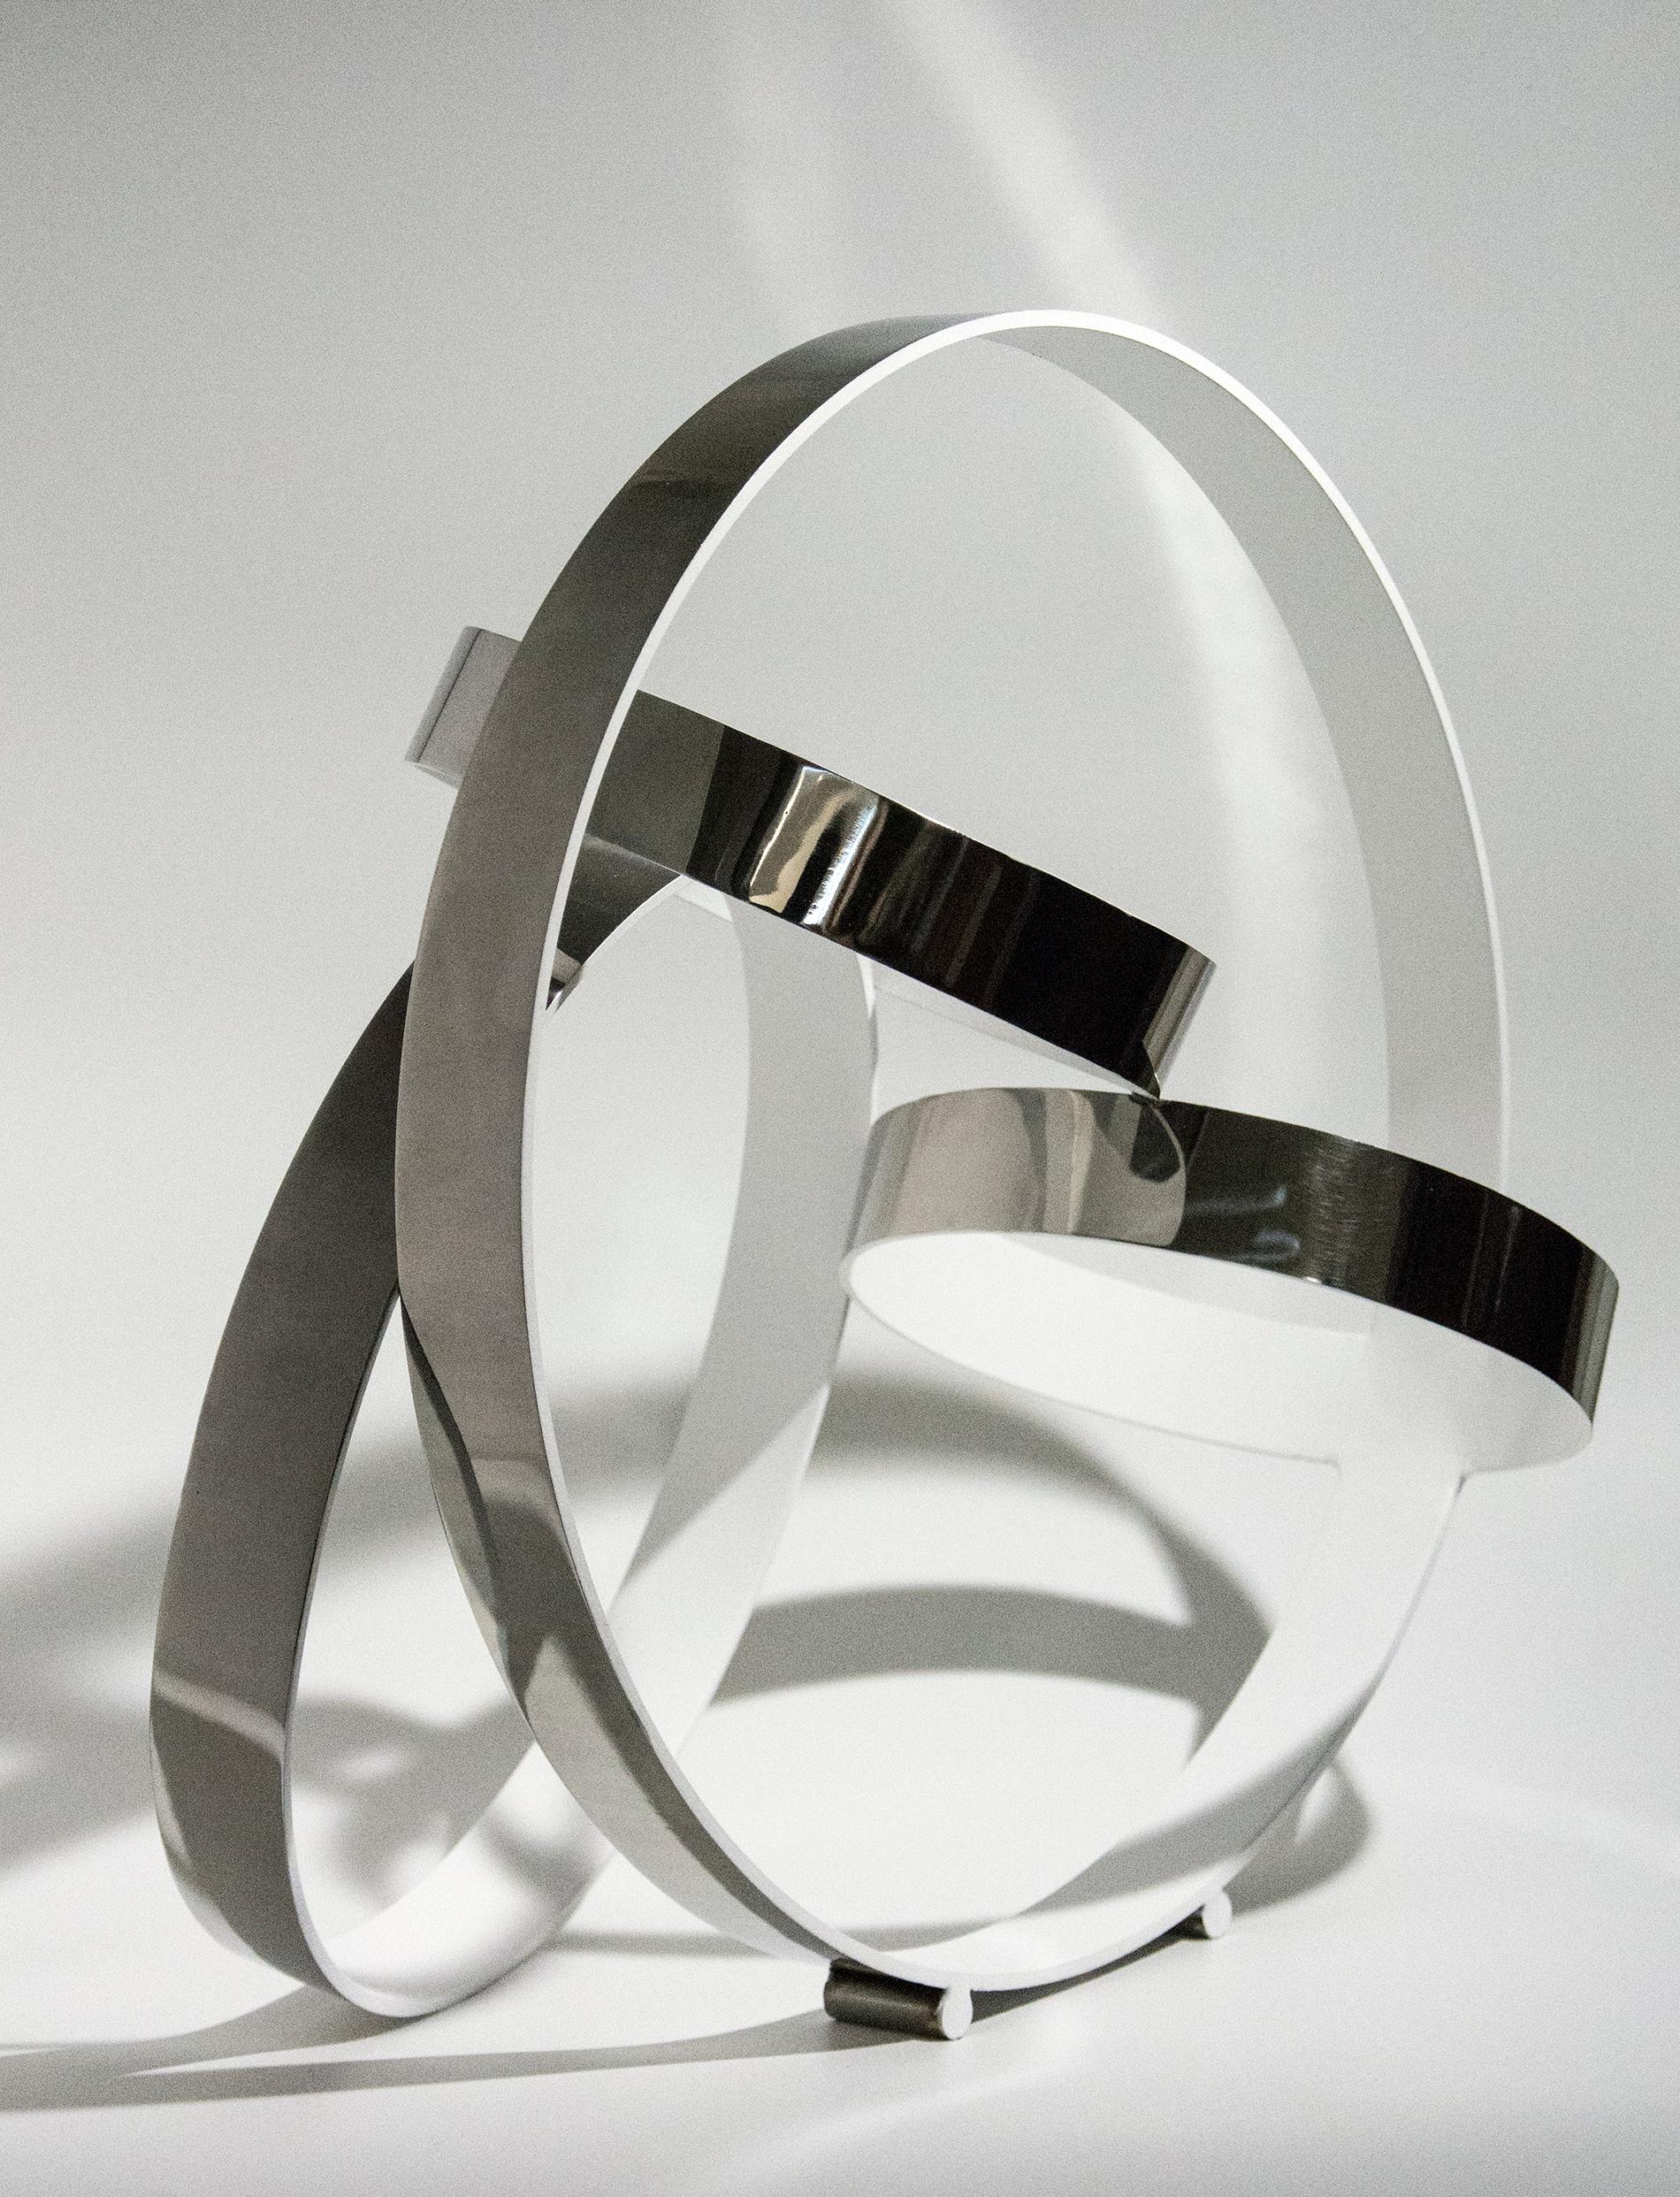 10 inch steel ring